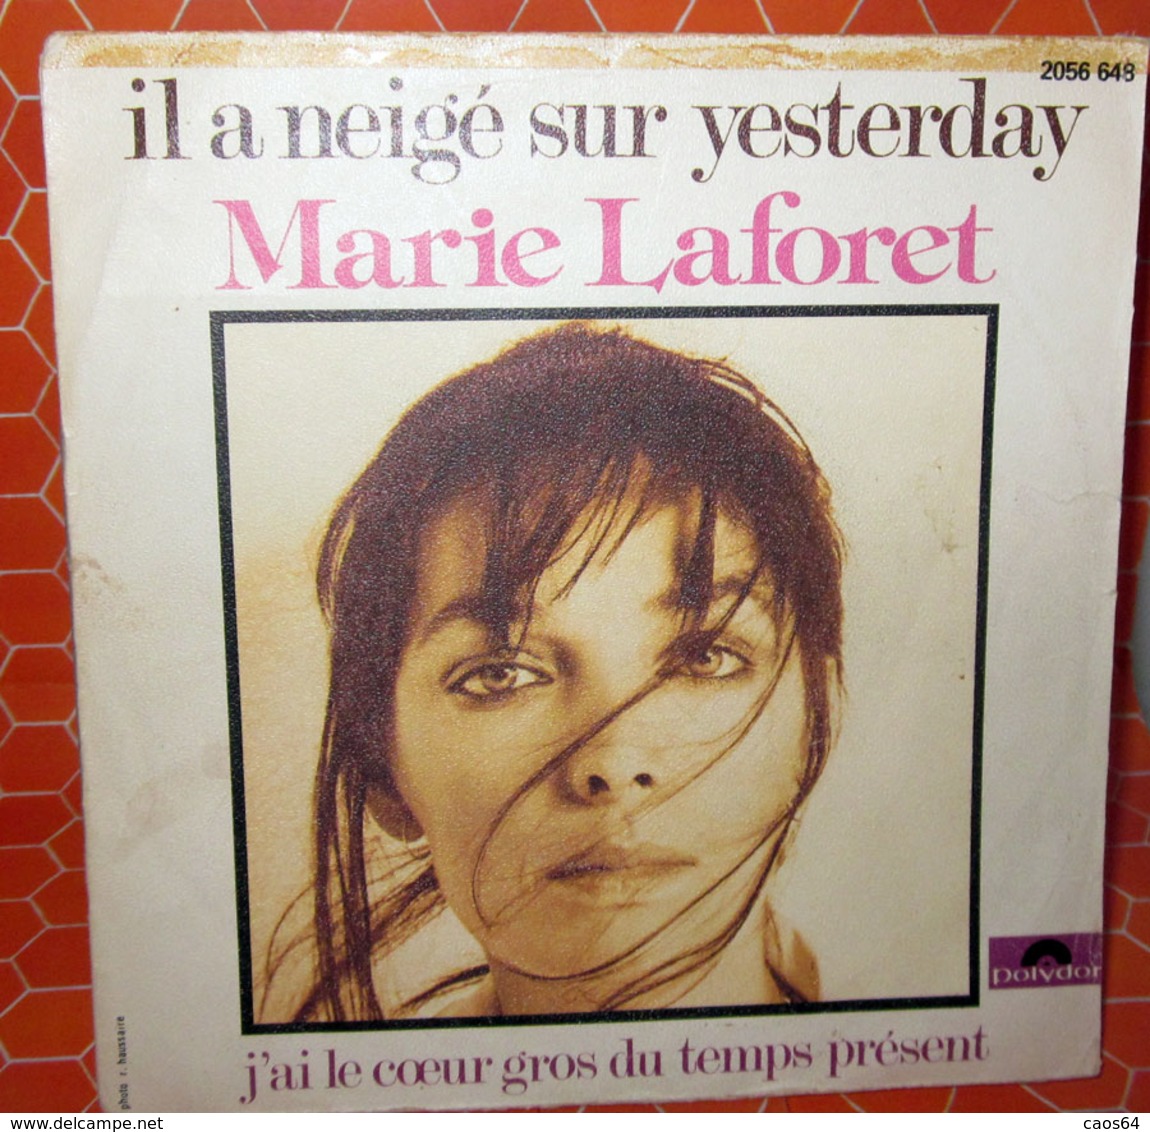 MARIE LAFORET IL A NEIGE SUR YESTERDAY  AUCUN VINYLE  COVER NO VINYL 45 GIRI - 7" - Accessori & Bustine